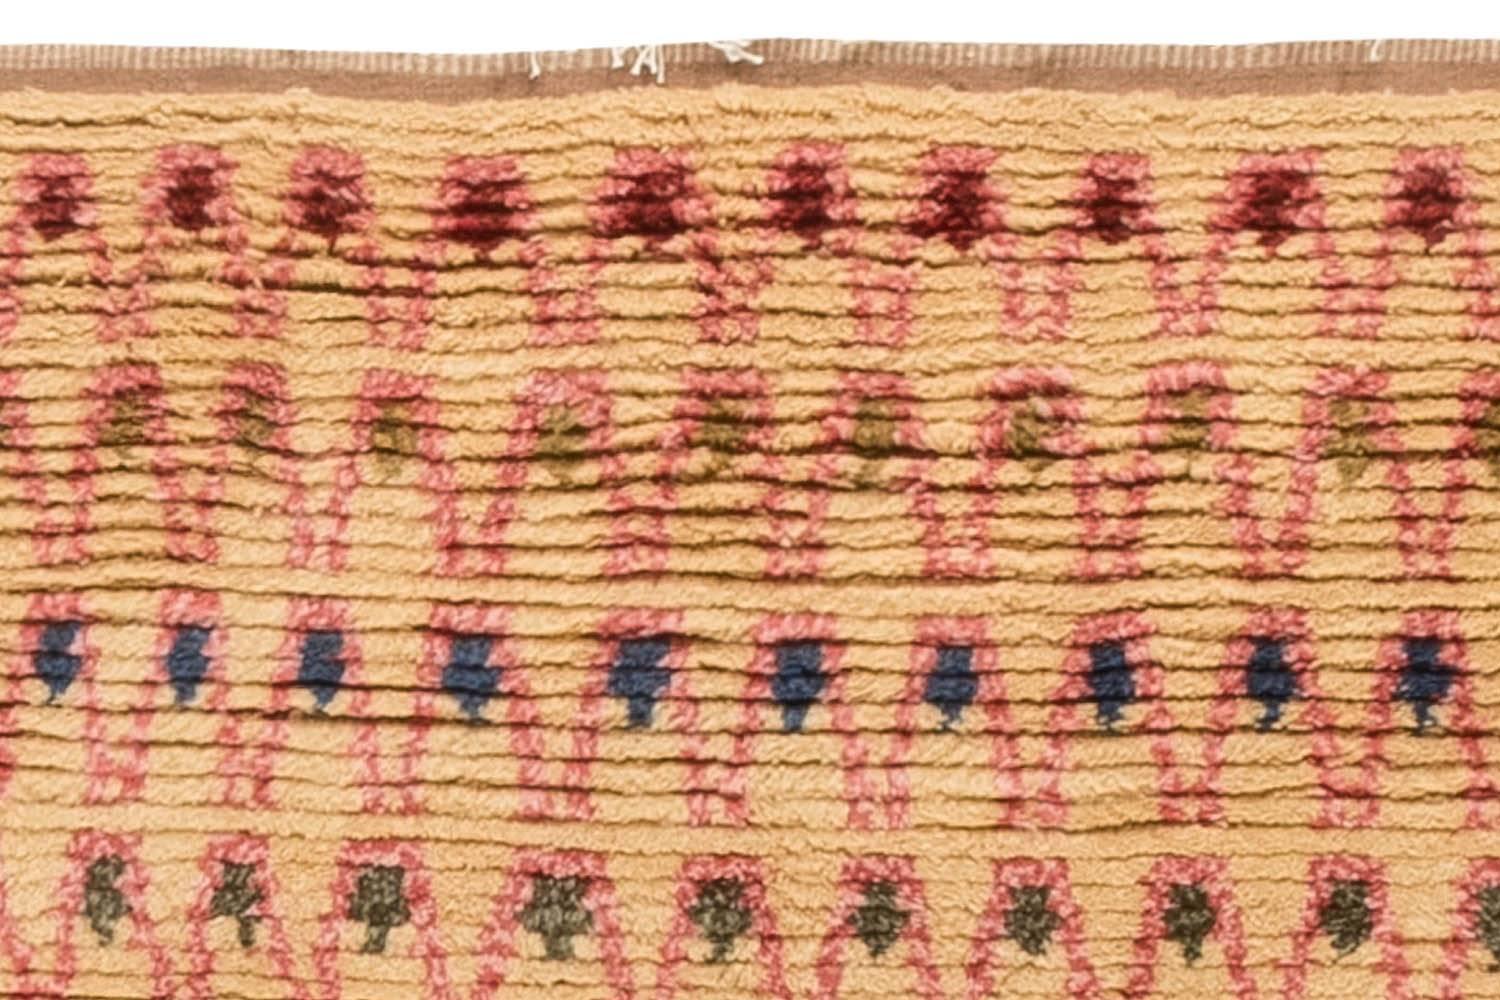 Hand-Knotted Contemporary Rya Rainbow Handmade Wool Rug by Doris Leslie Blau For Sale